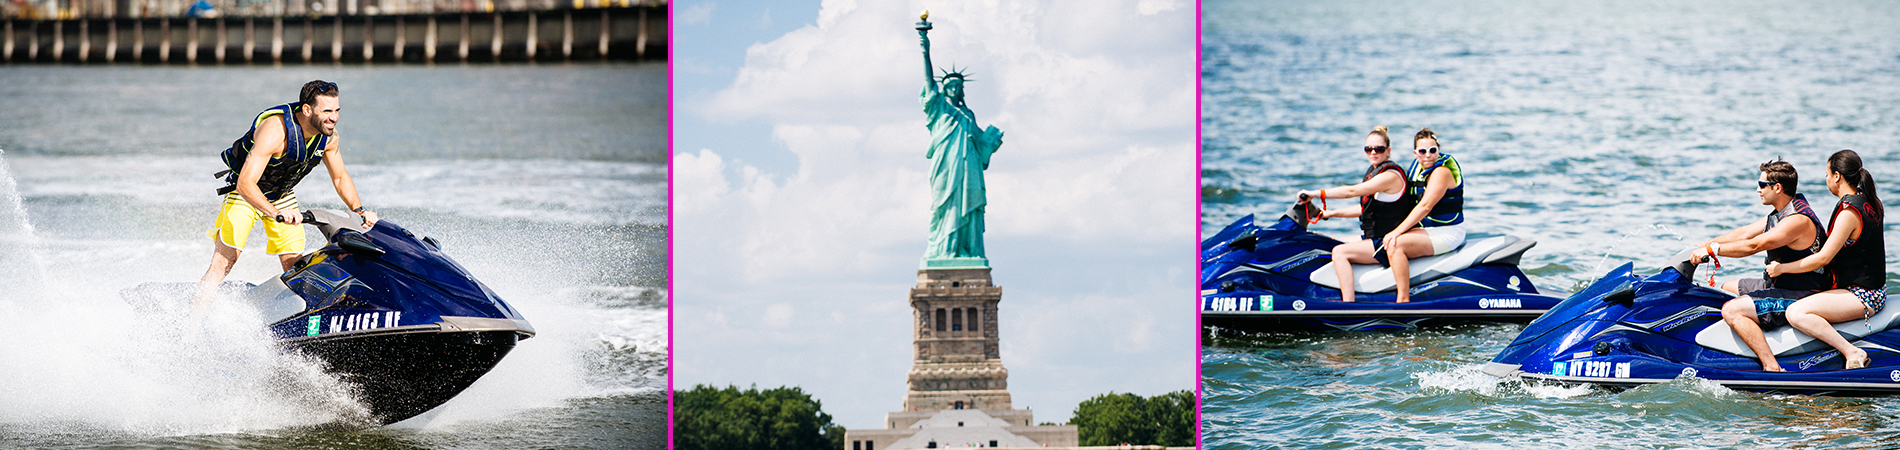 NYC Jet SKi Tour Near Statue Of Liberty